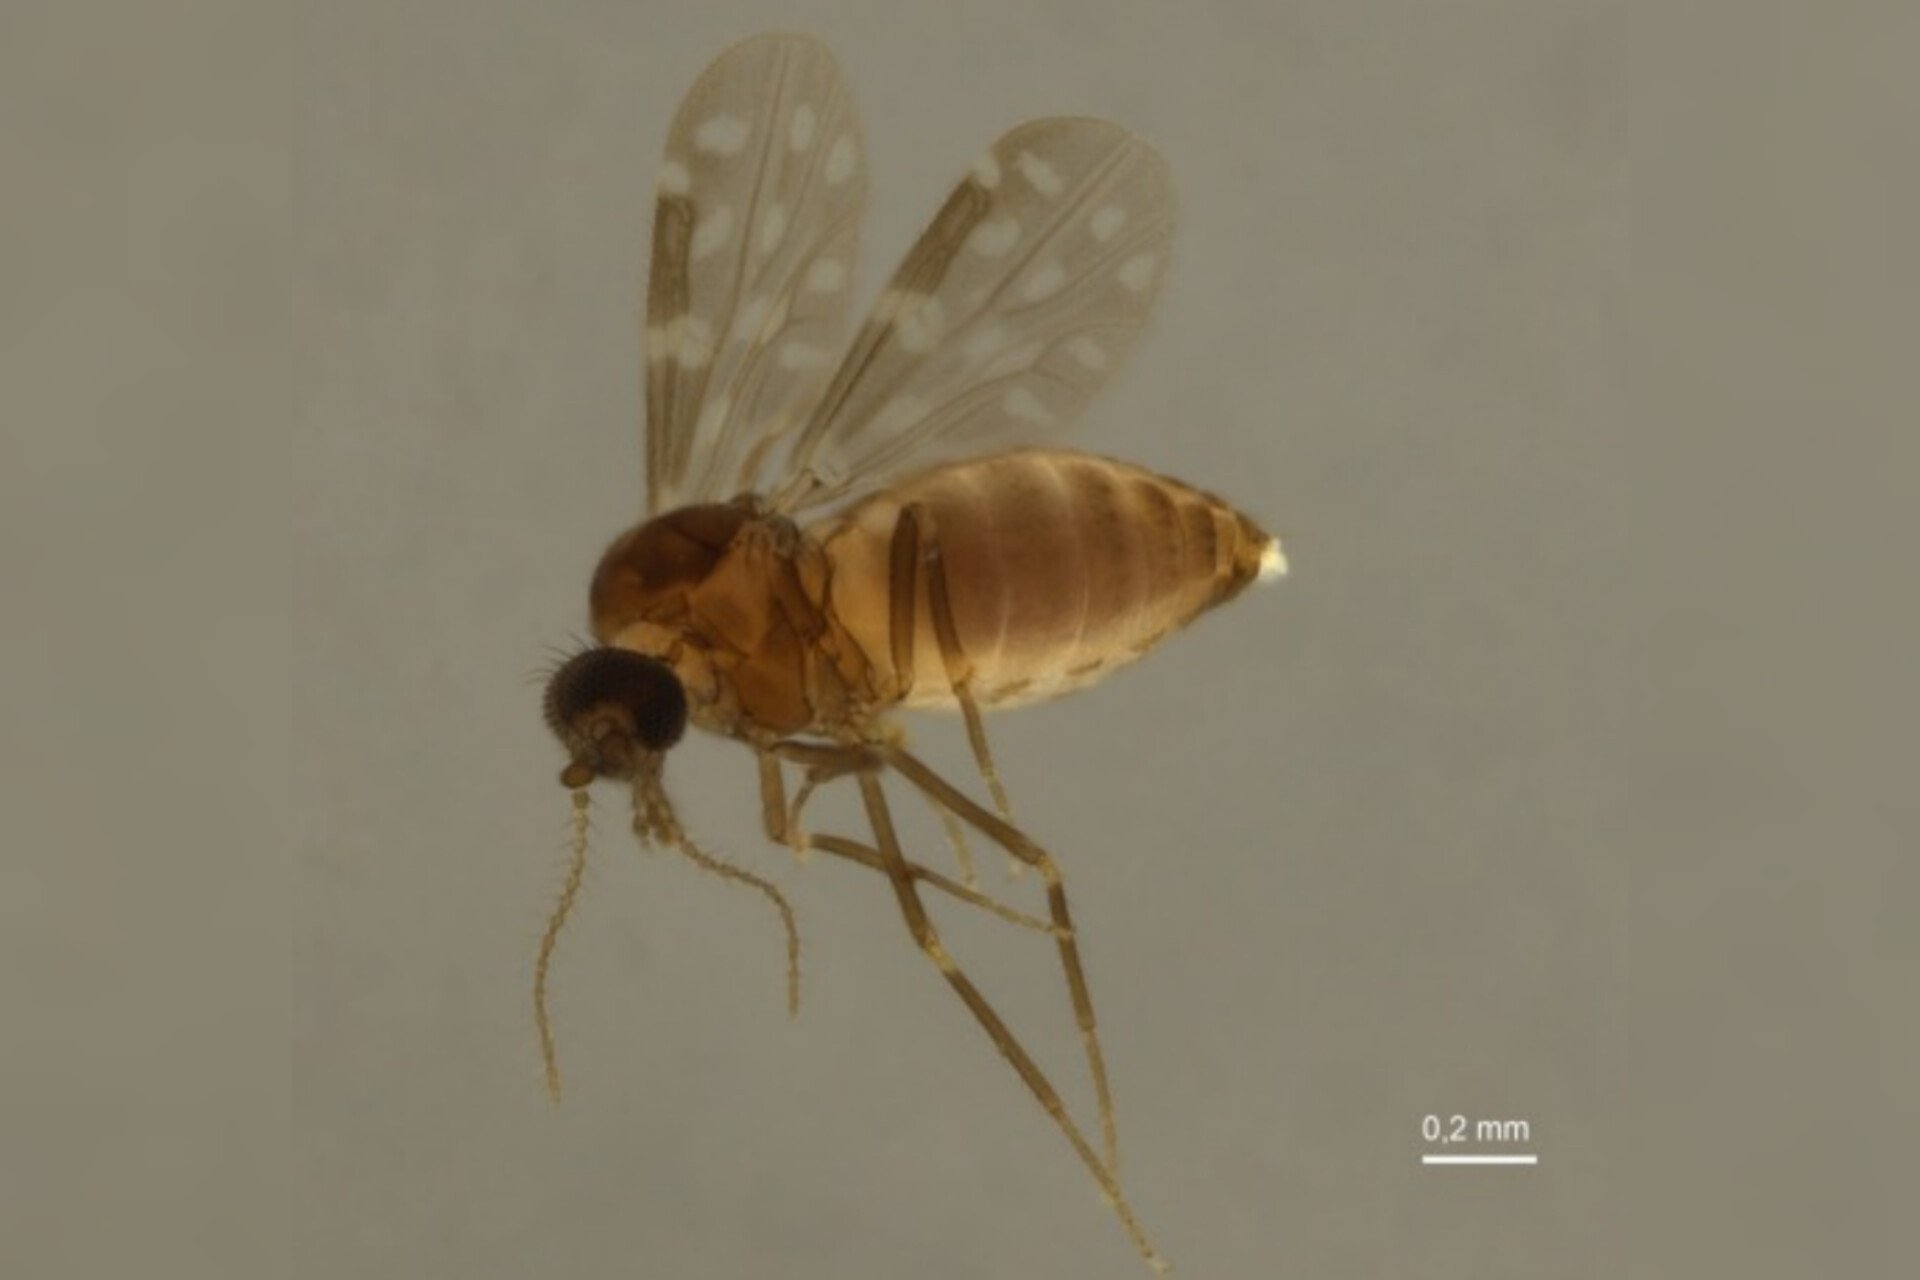 Imagem de microscpio retrata o mosquito Culicoides paraenses, transmissor da febre oropouche - Metrpoles